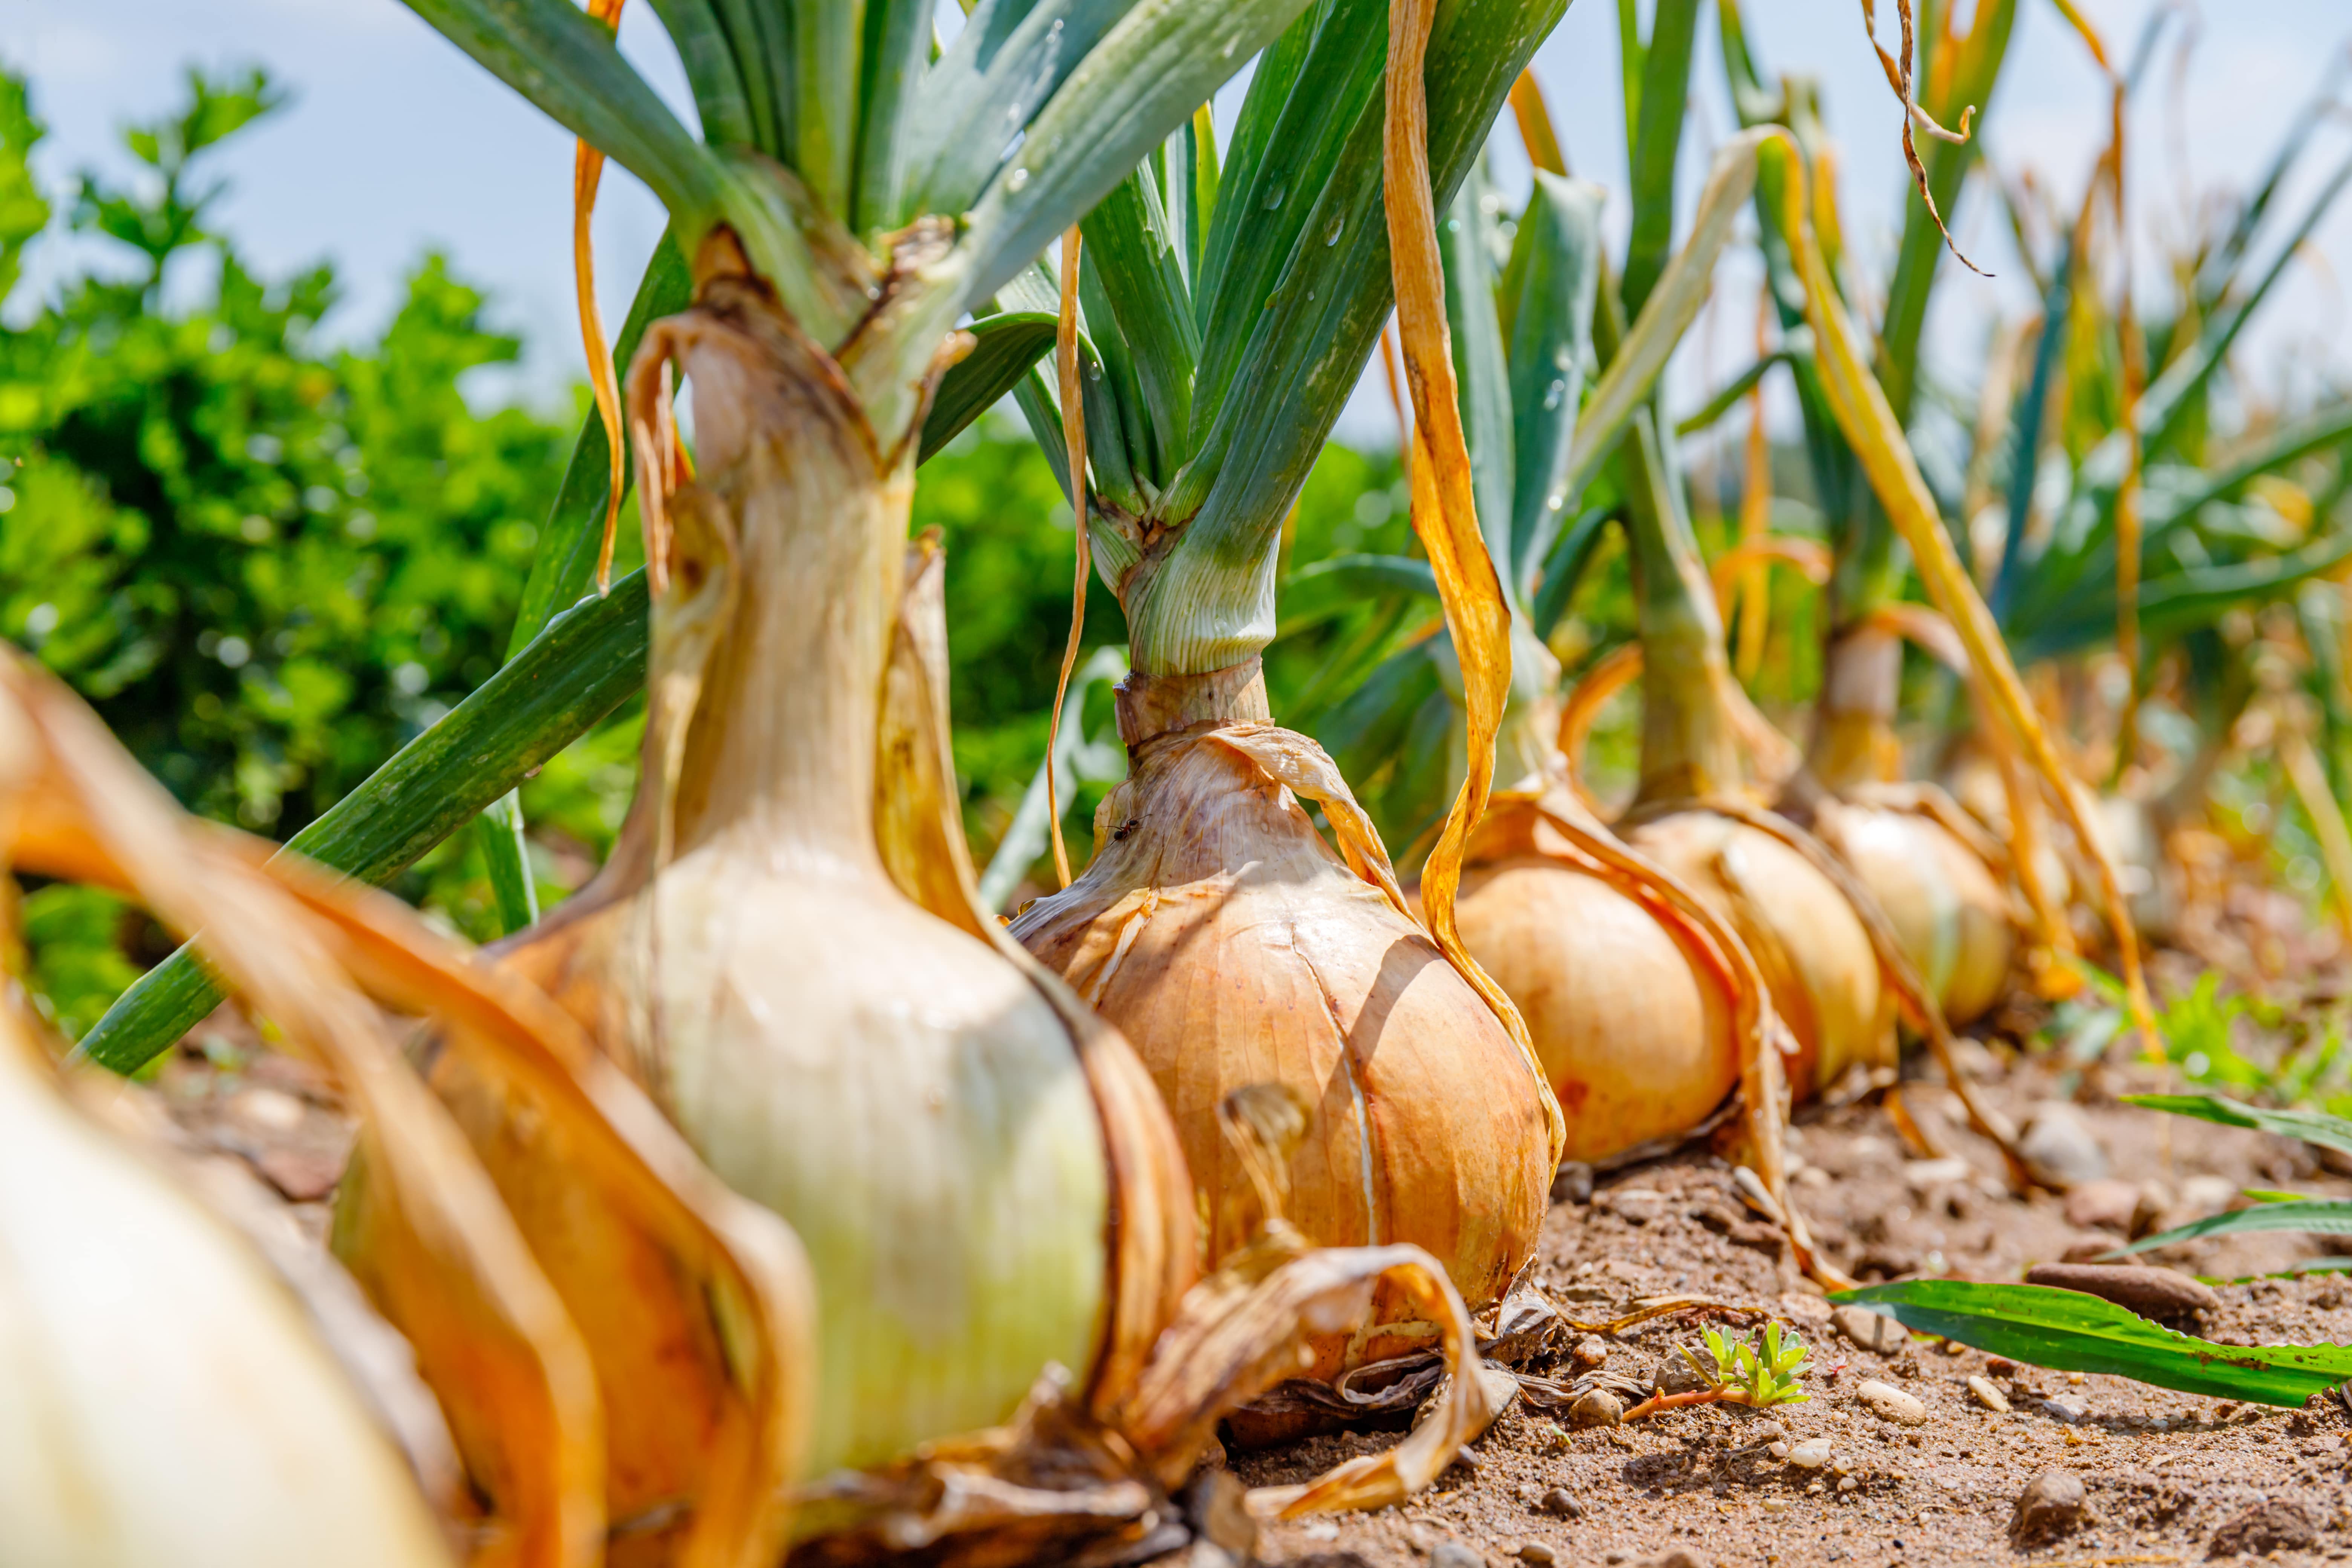 summer onion harvesting start in pune [image credit-tridge.com]